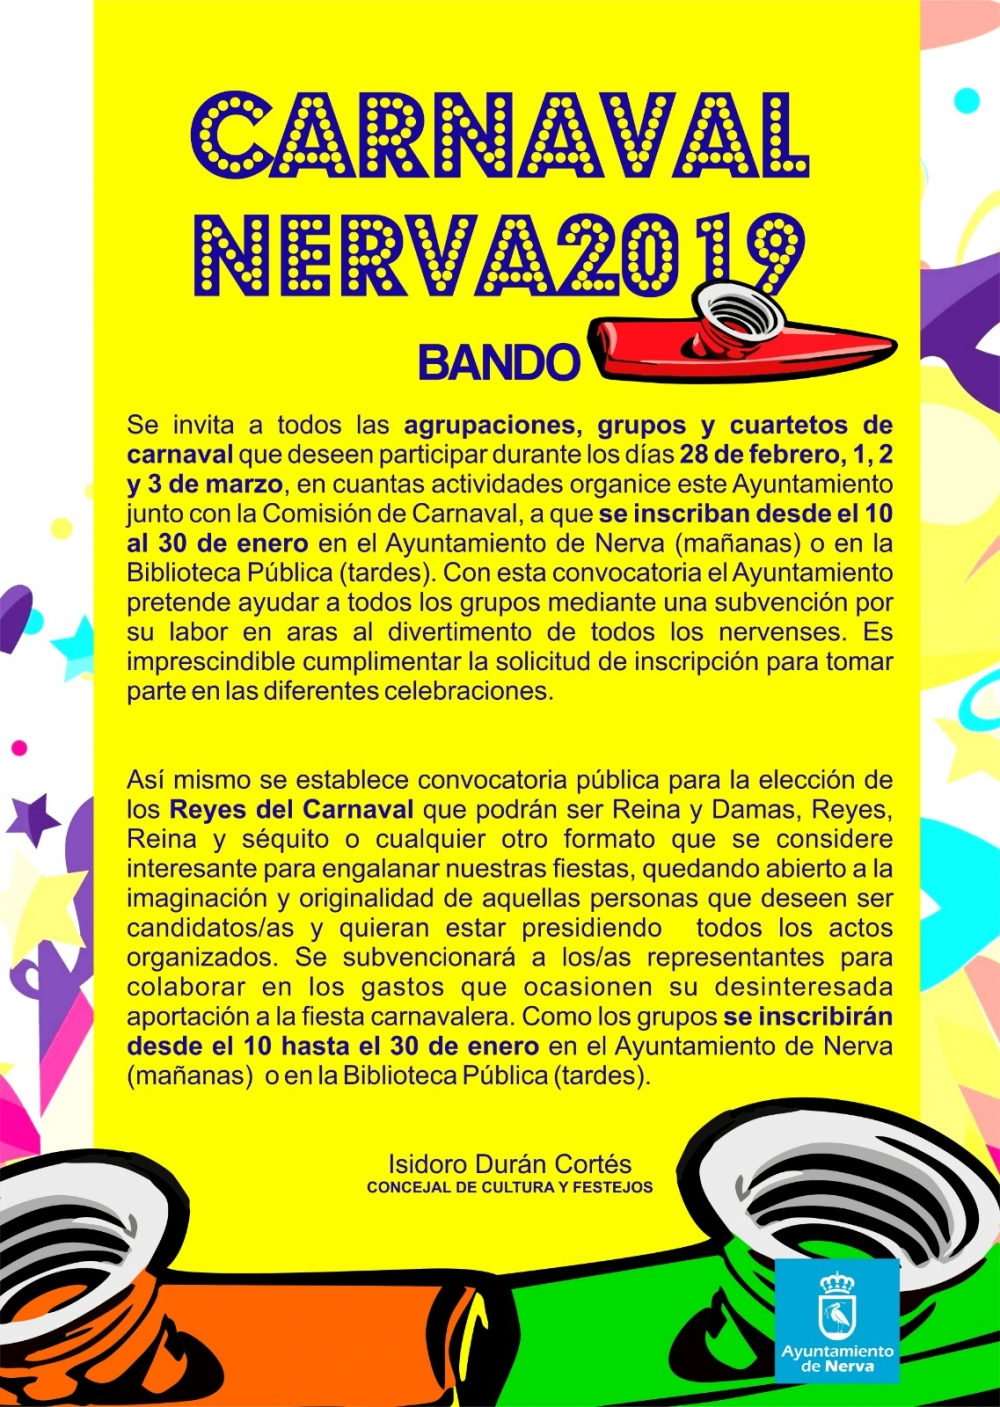 Carnaval Nerva 2019